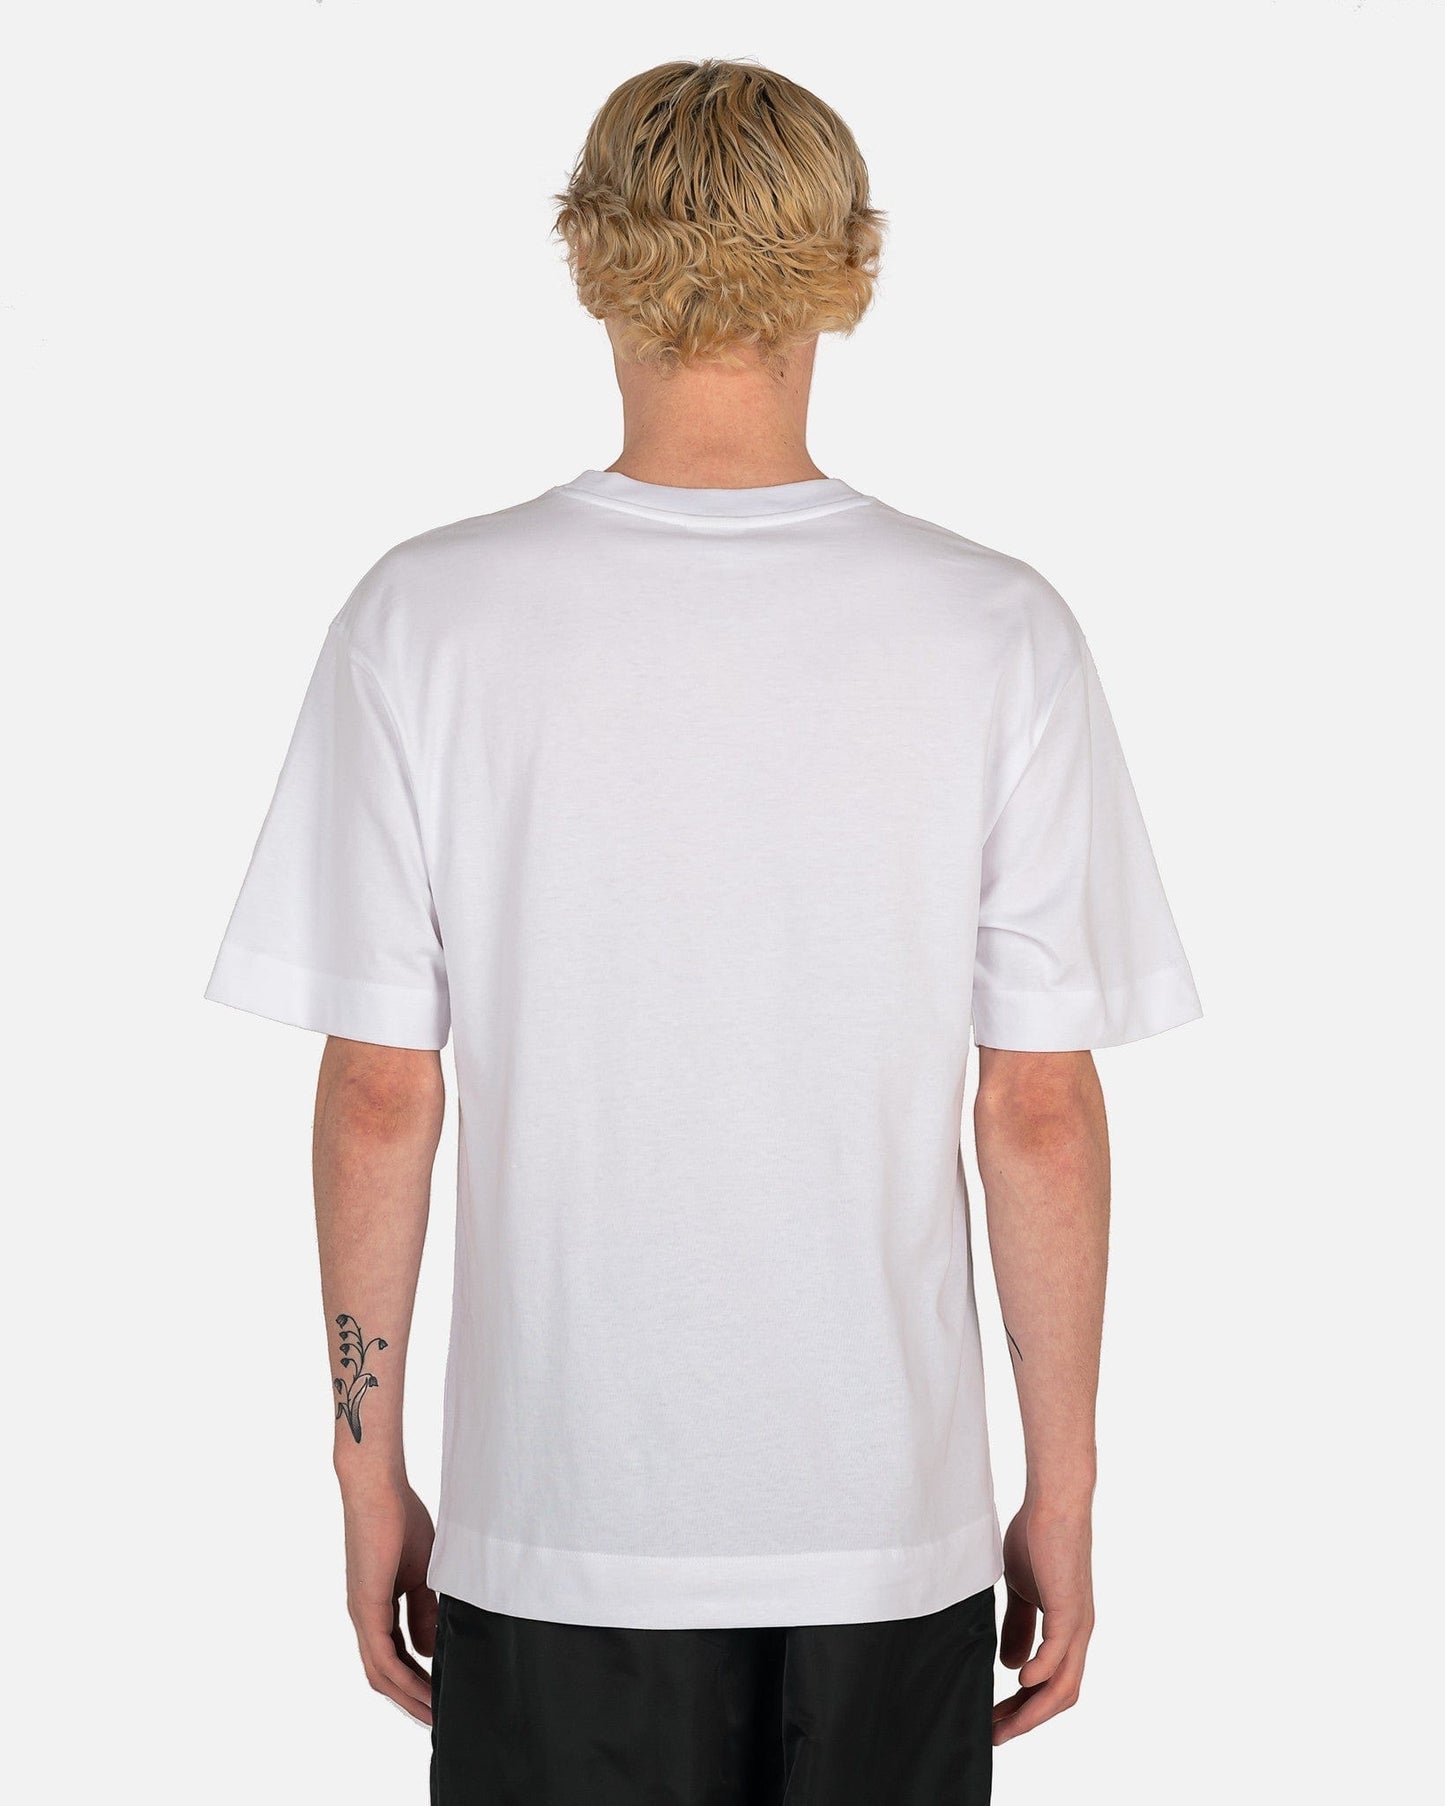 Dries Van Noten Men's T-Shirts Heli T-Shirt in White